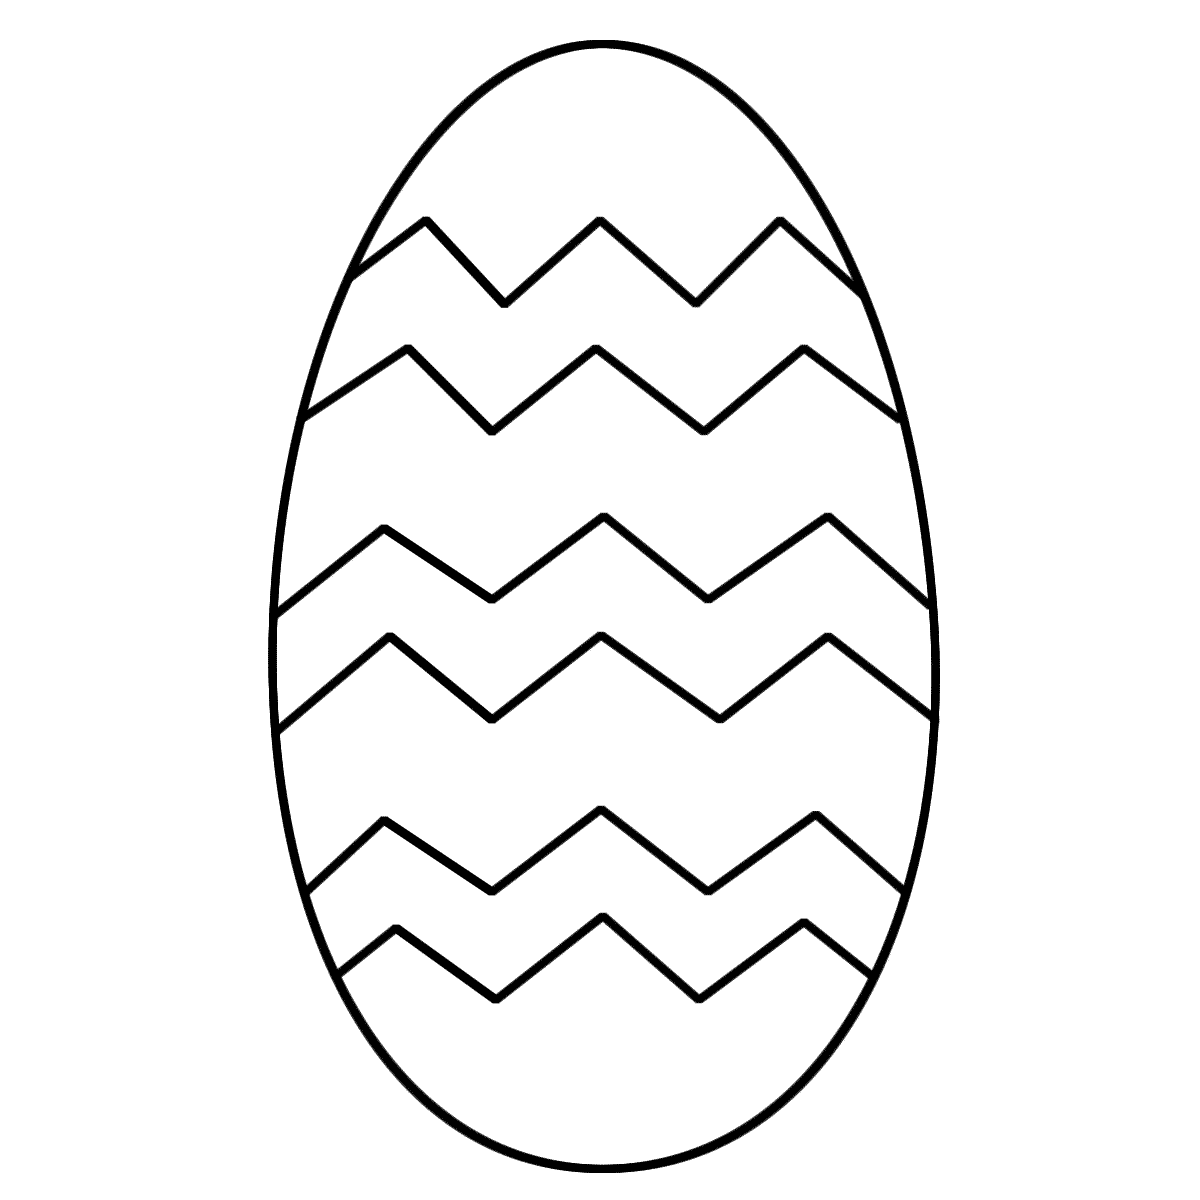 Free egg free clip art of egg clipart black and white 8 outline of